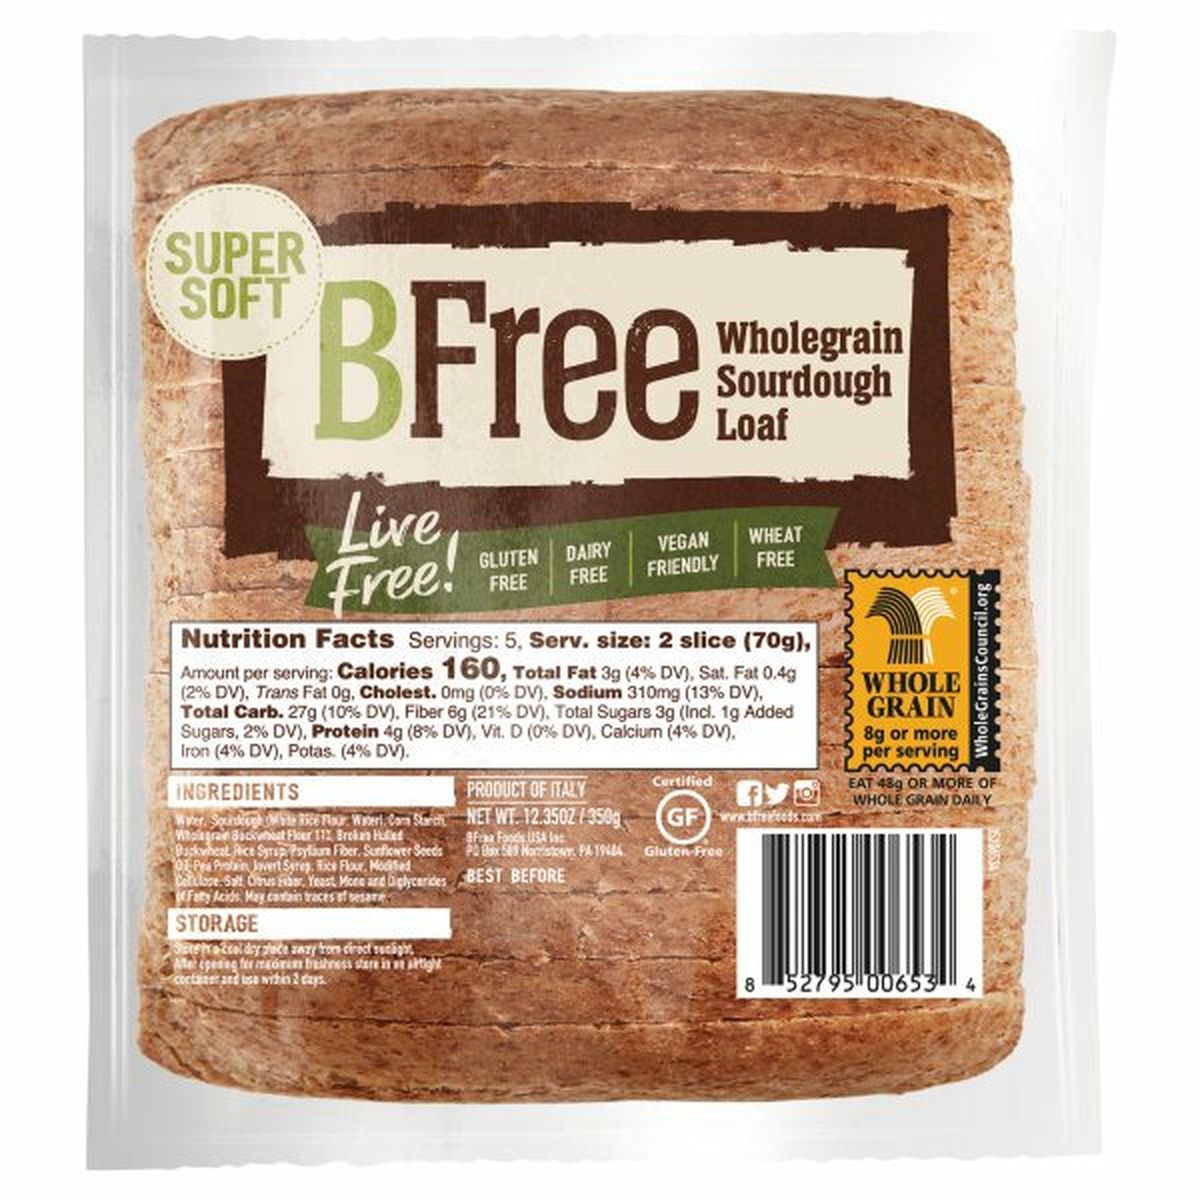 Calories in BFree Loaf, Sourdough, Wholegrain, Super Soft